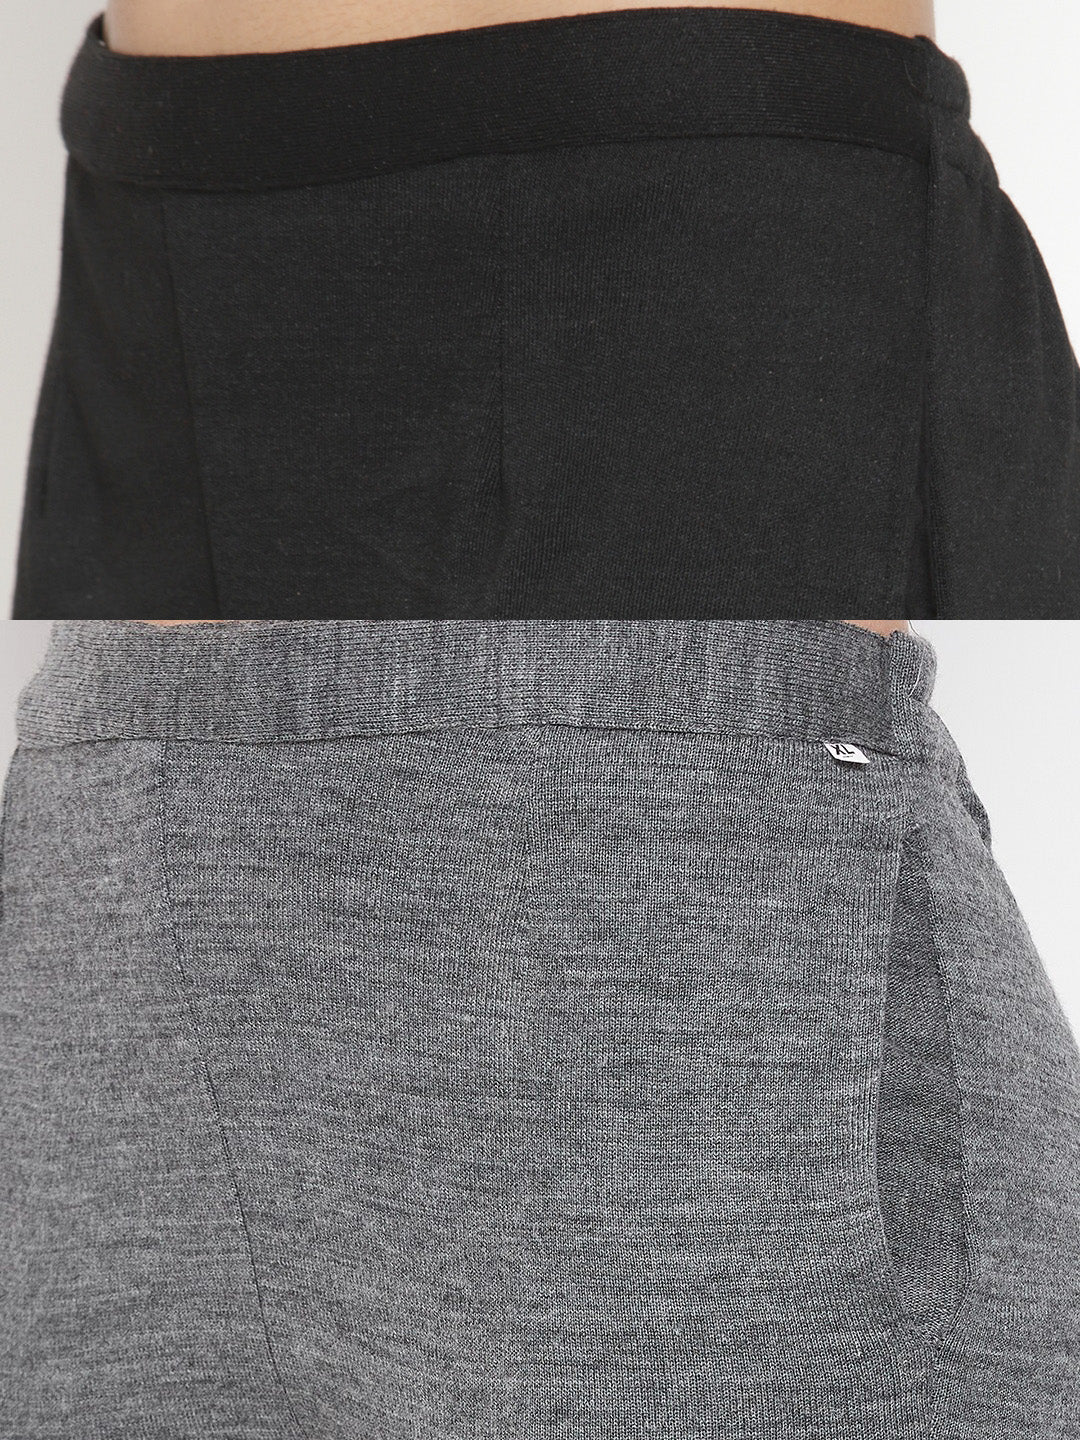 Clora Black & Grey Solid Woolen Trouser (Pack of 2)